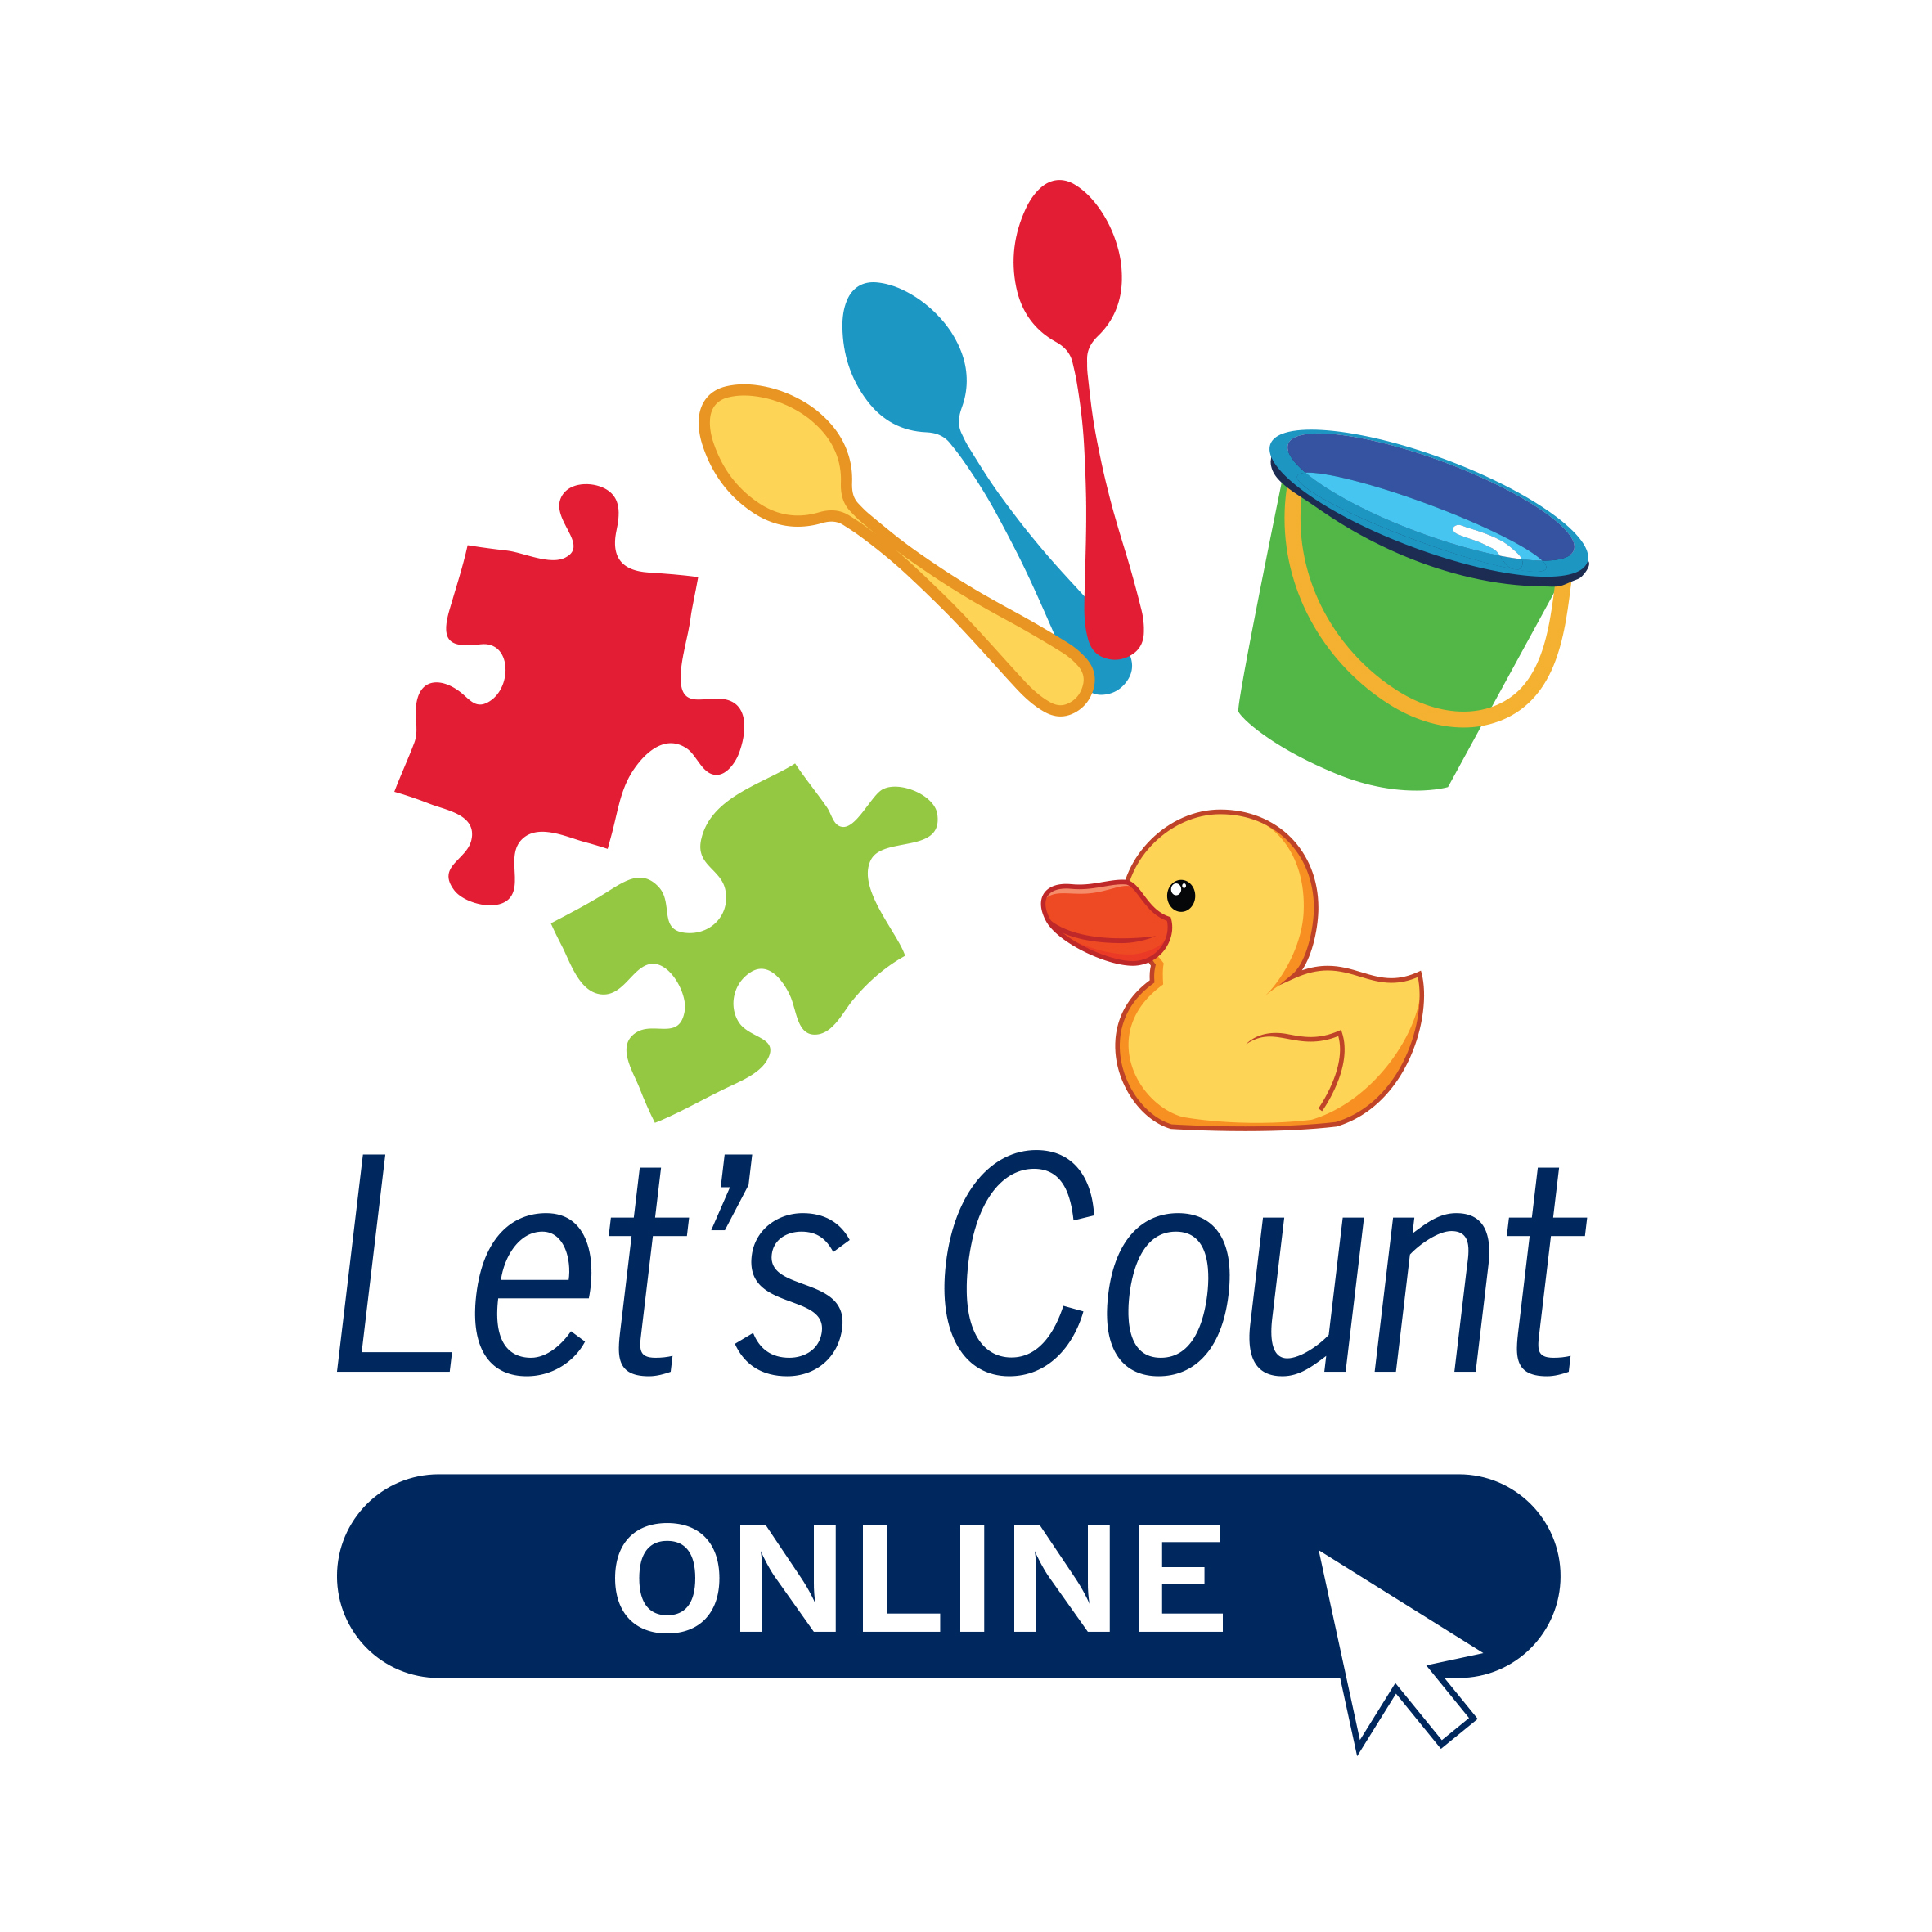 Let's Count Online